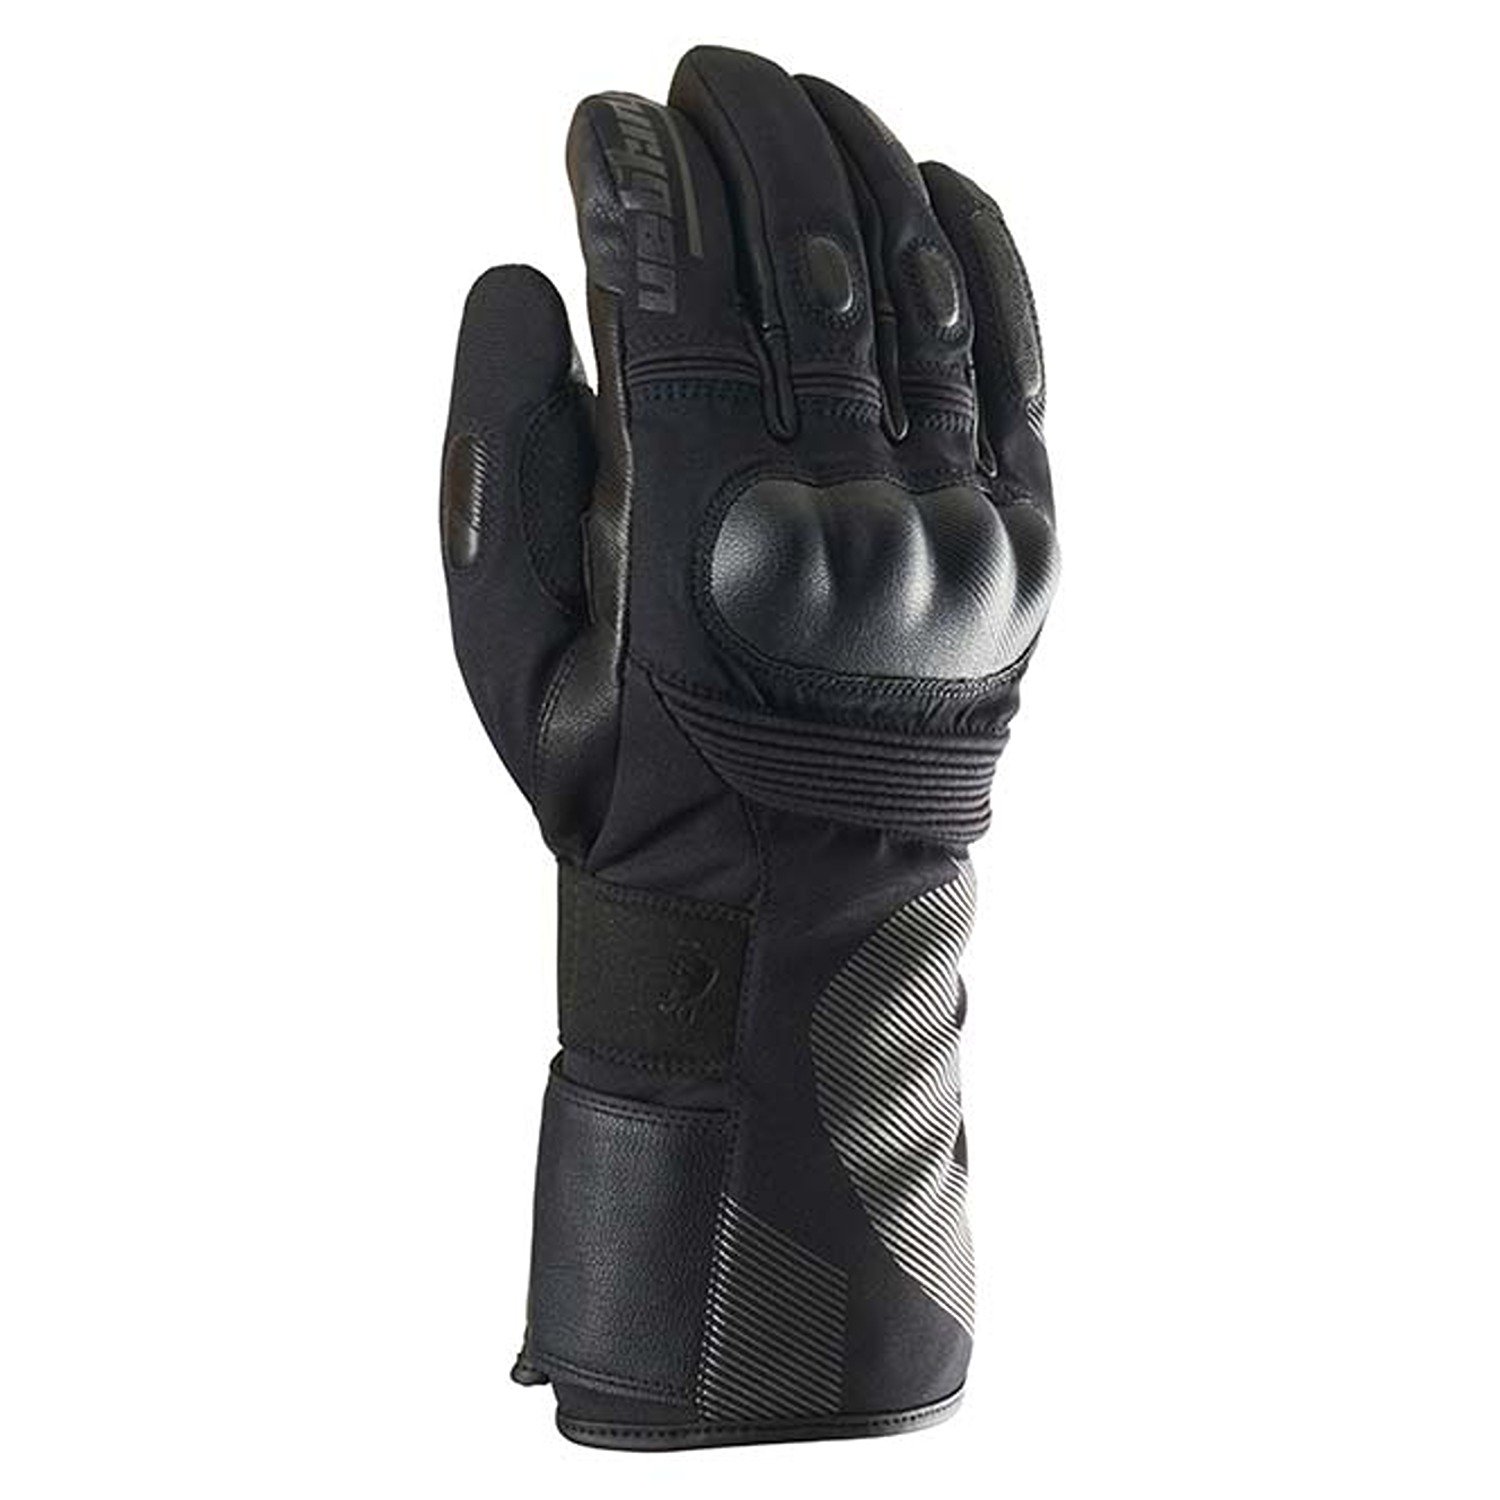 Image of Furygan Watts 375 Gloves Black Size 3XL ID 3435980358259